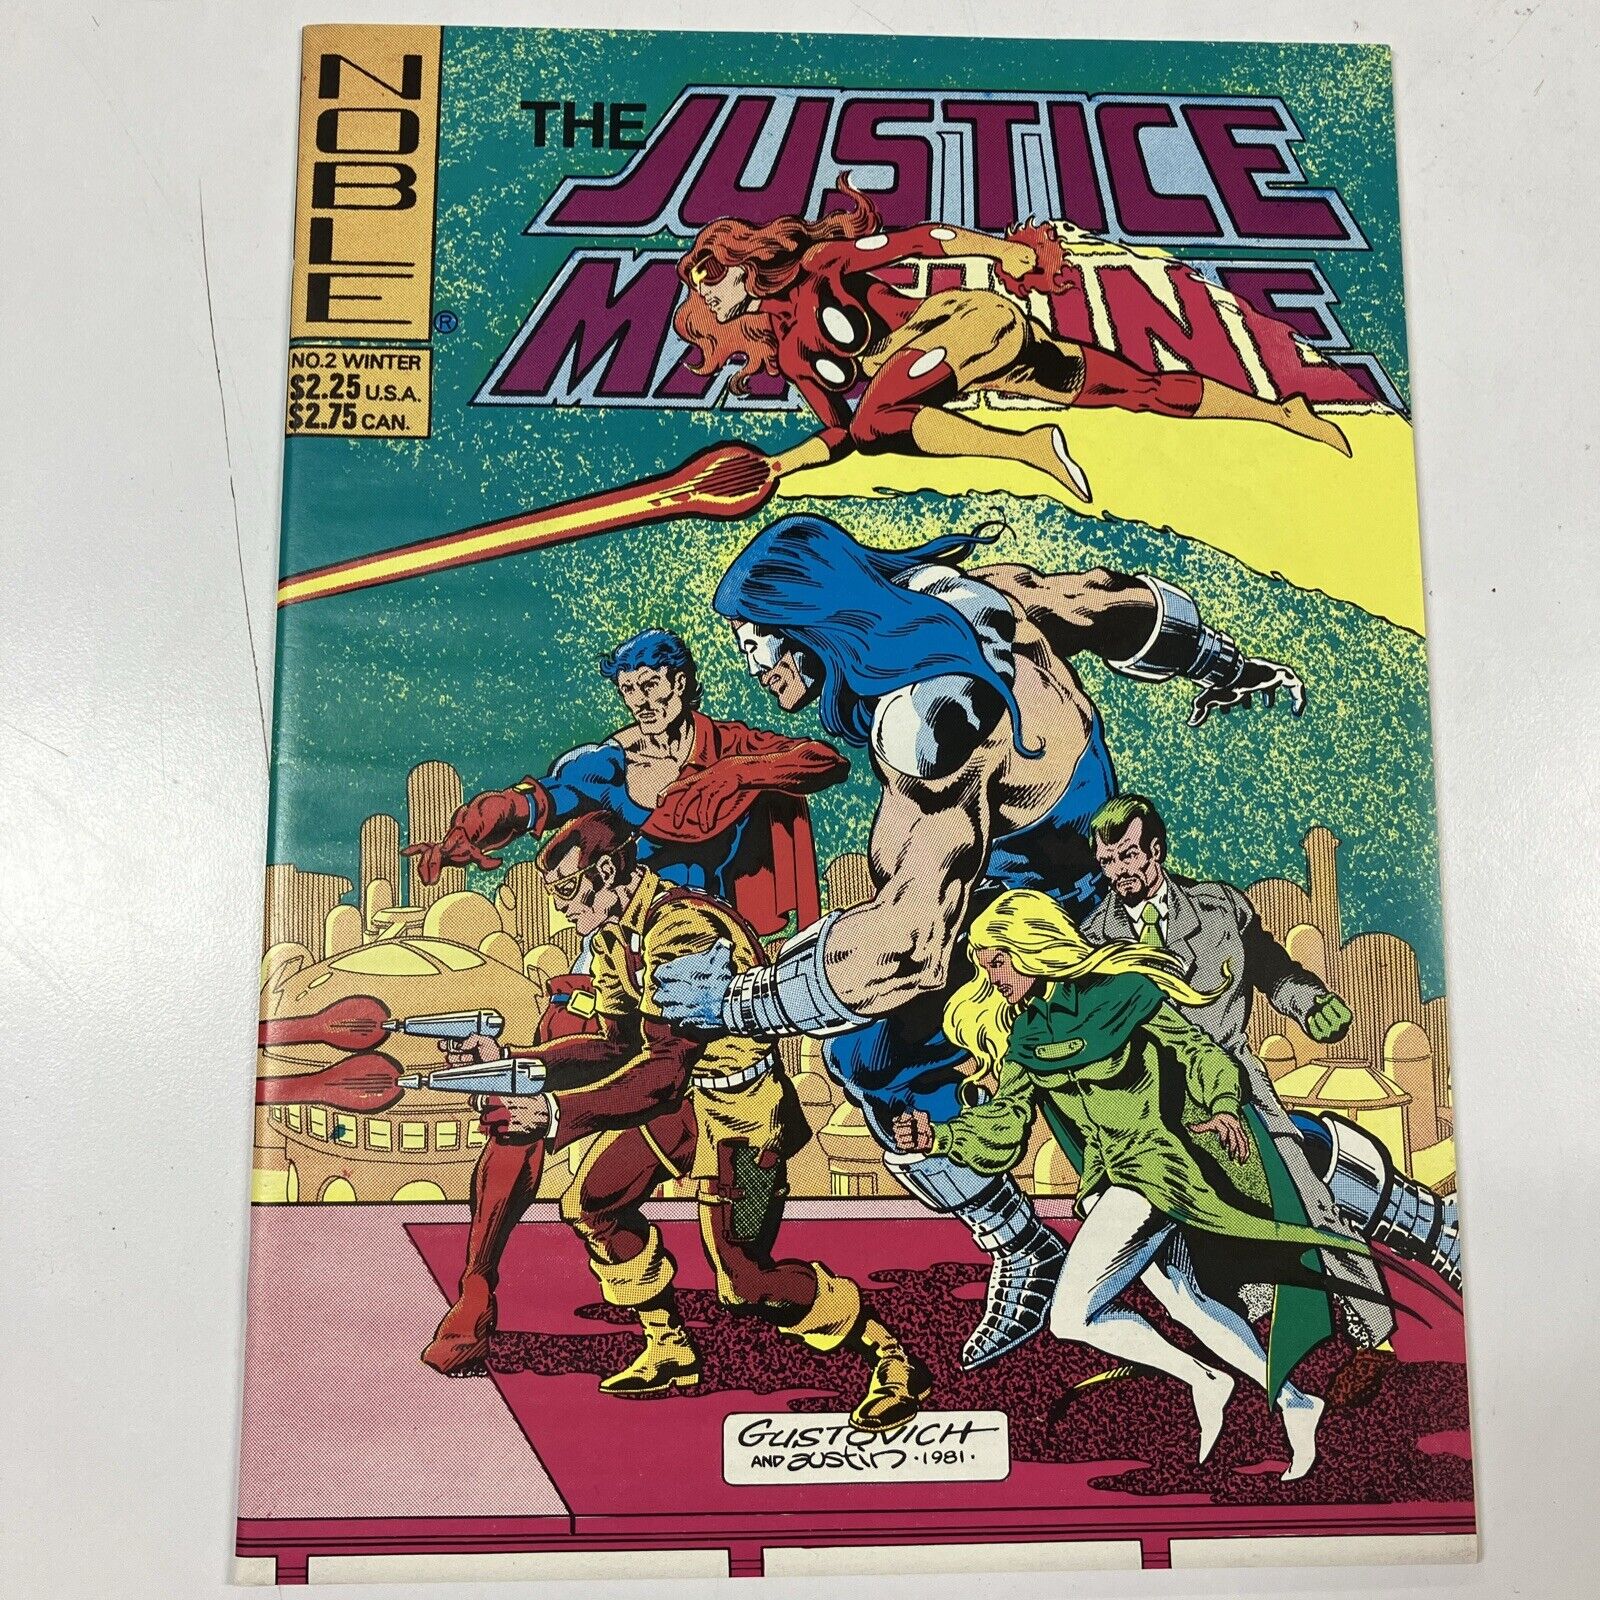 JUSTICE MACHINE #2 - NOBLE MAGAZINE SIZED - WRAPAROUND COVER - 1981 NM